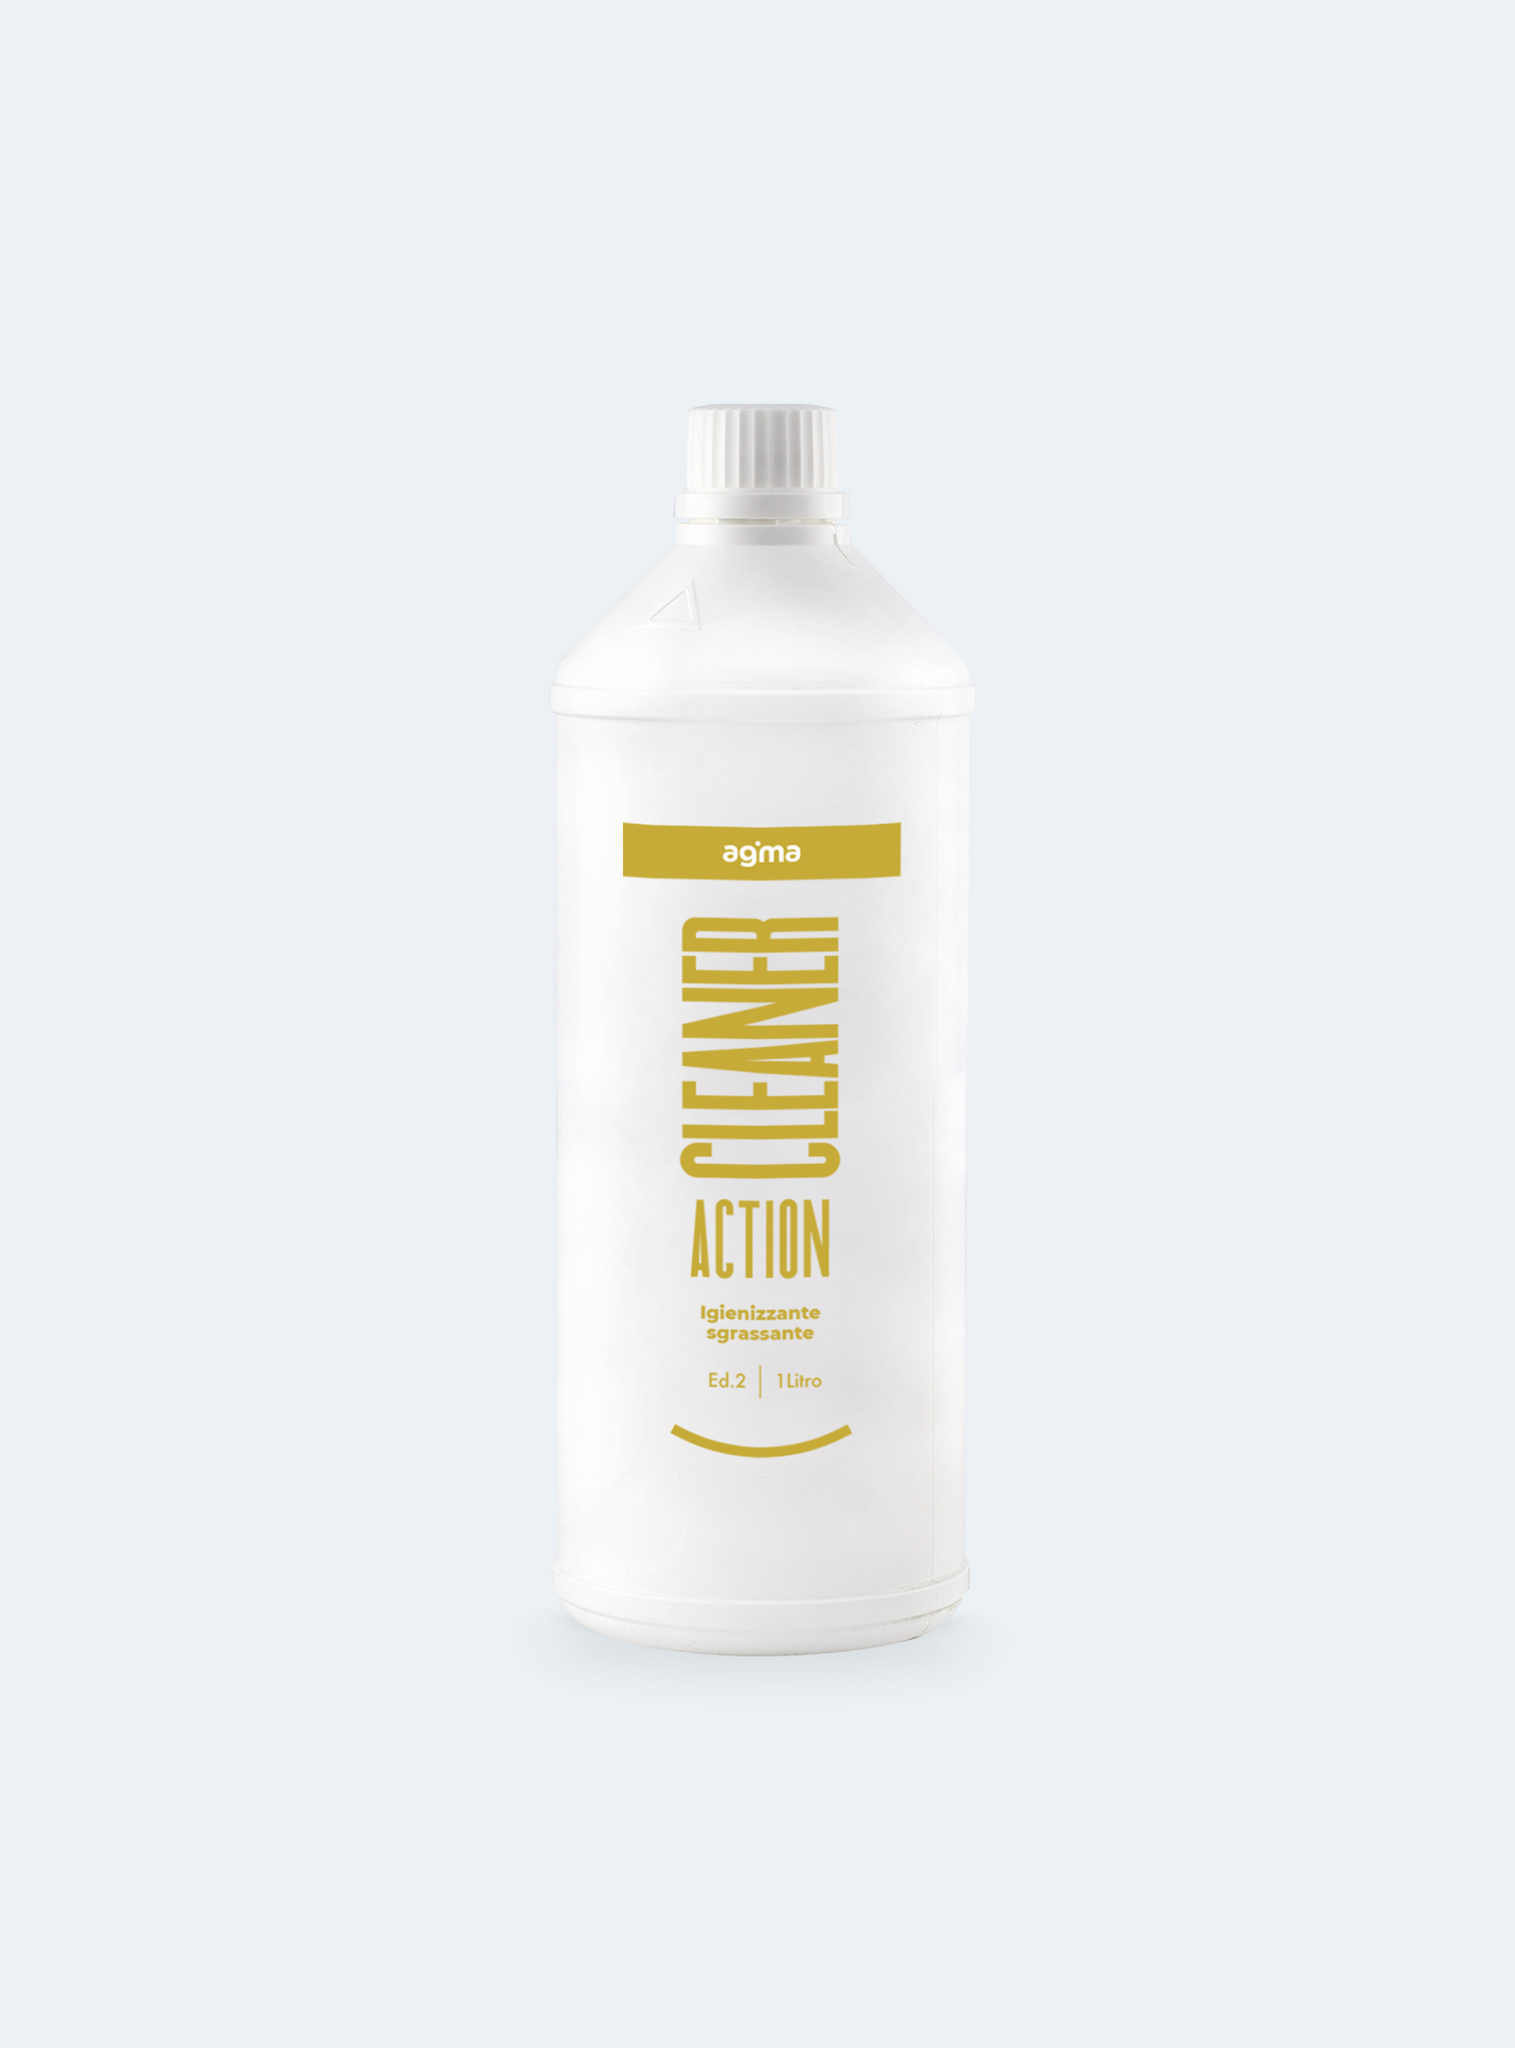 Action Cleaner - Igienizzante Sgrassante 1 litro